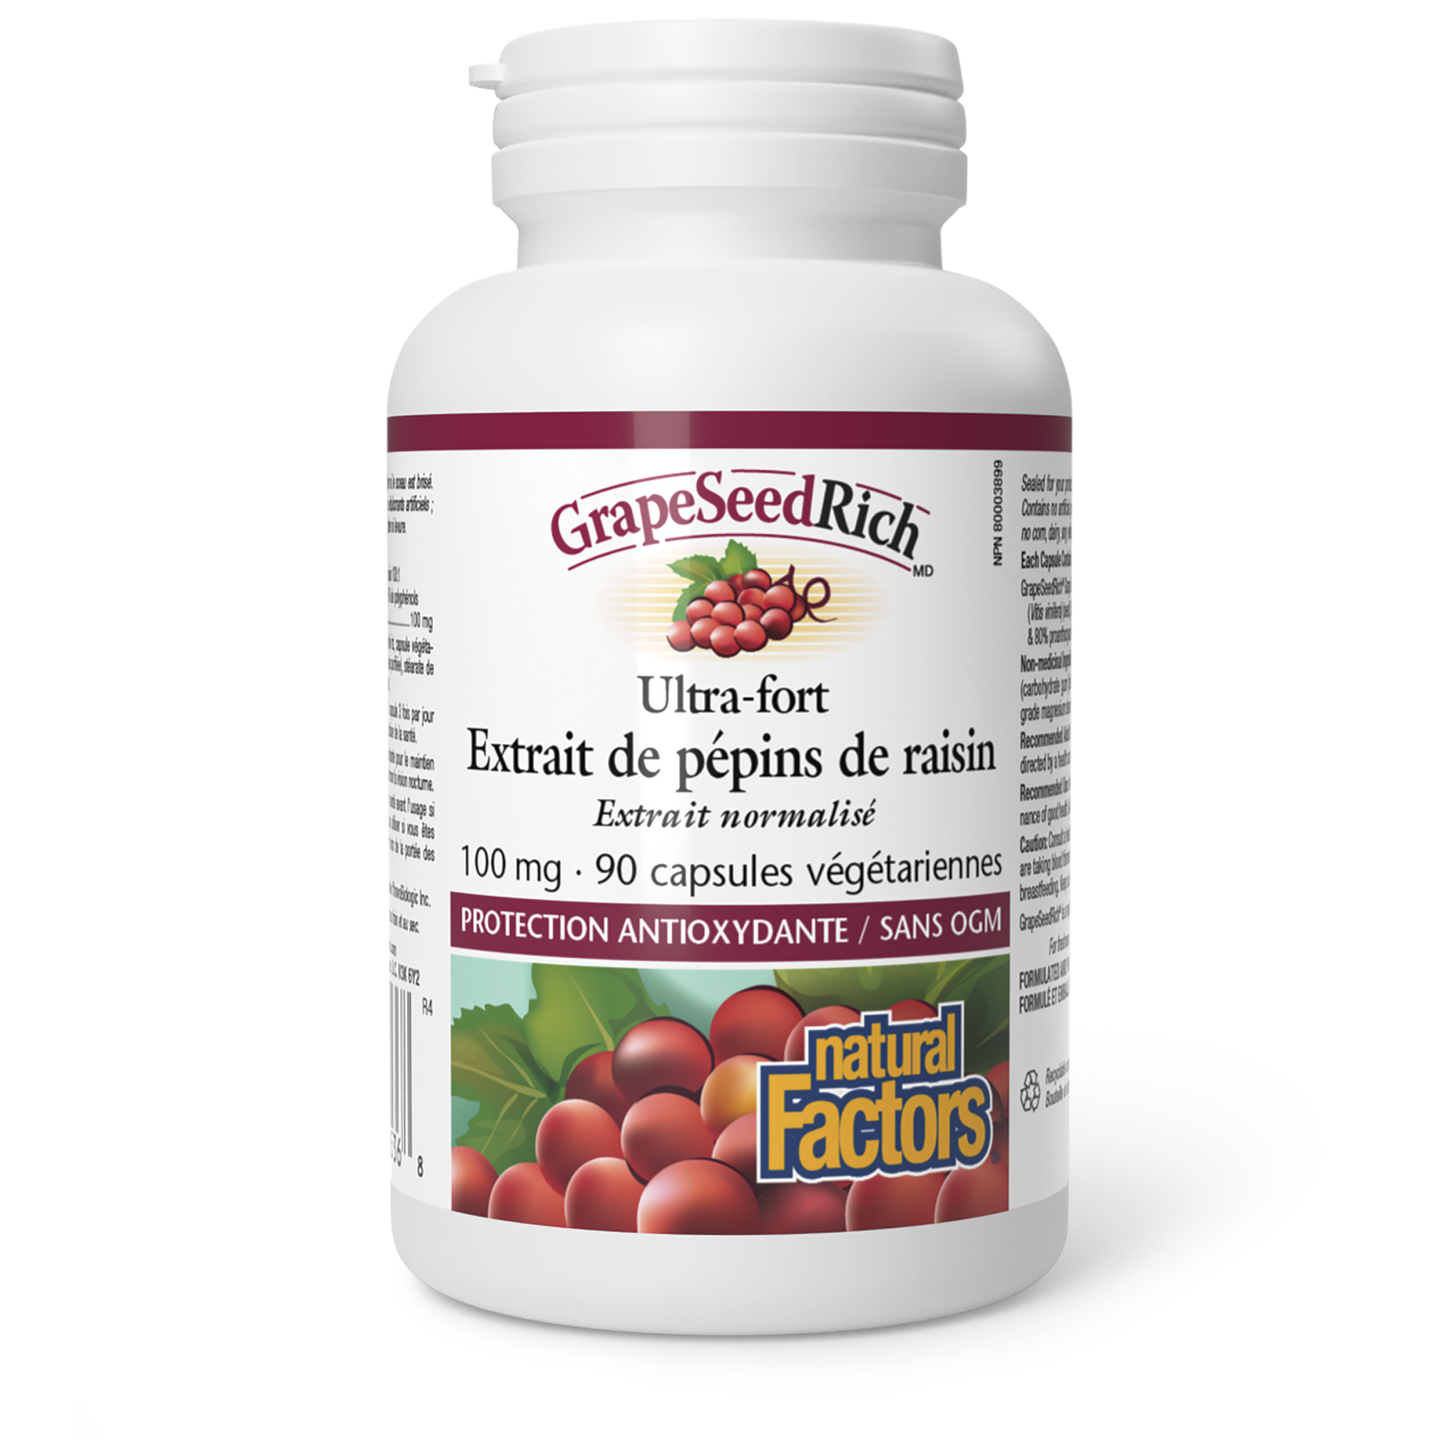 GrapeSeedRich Ultra-fort Extrait de pépins de raisin 100 mg, Natural Factors|v|image|4536